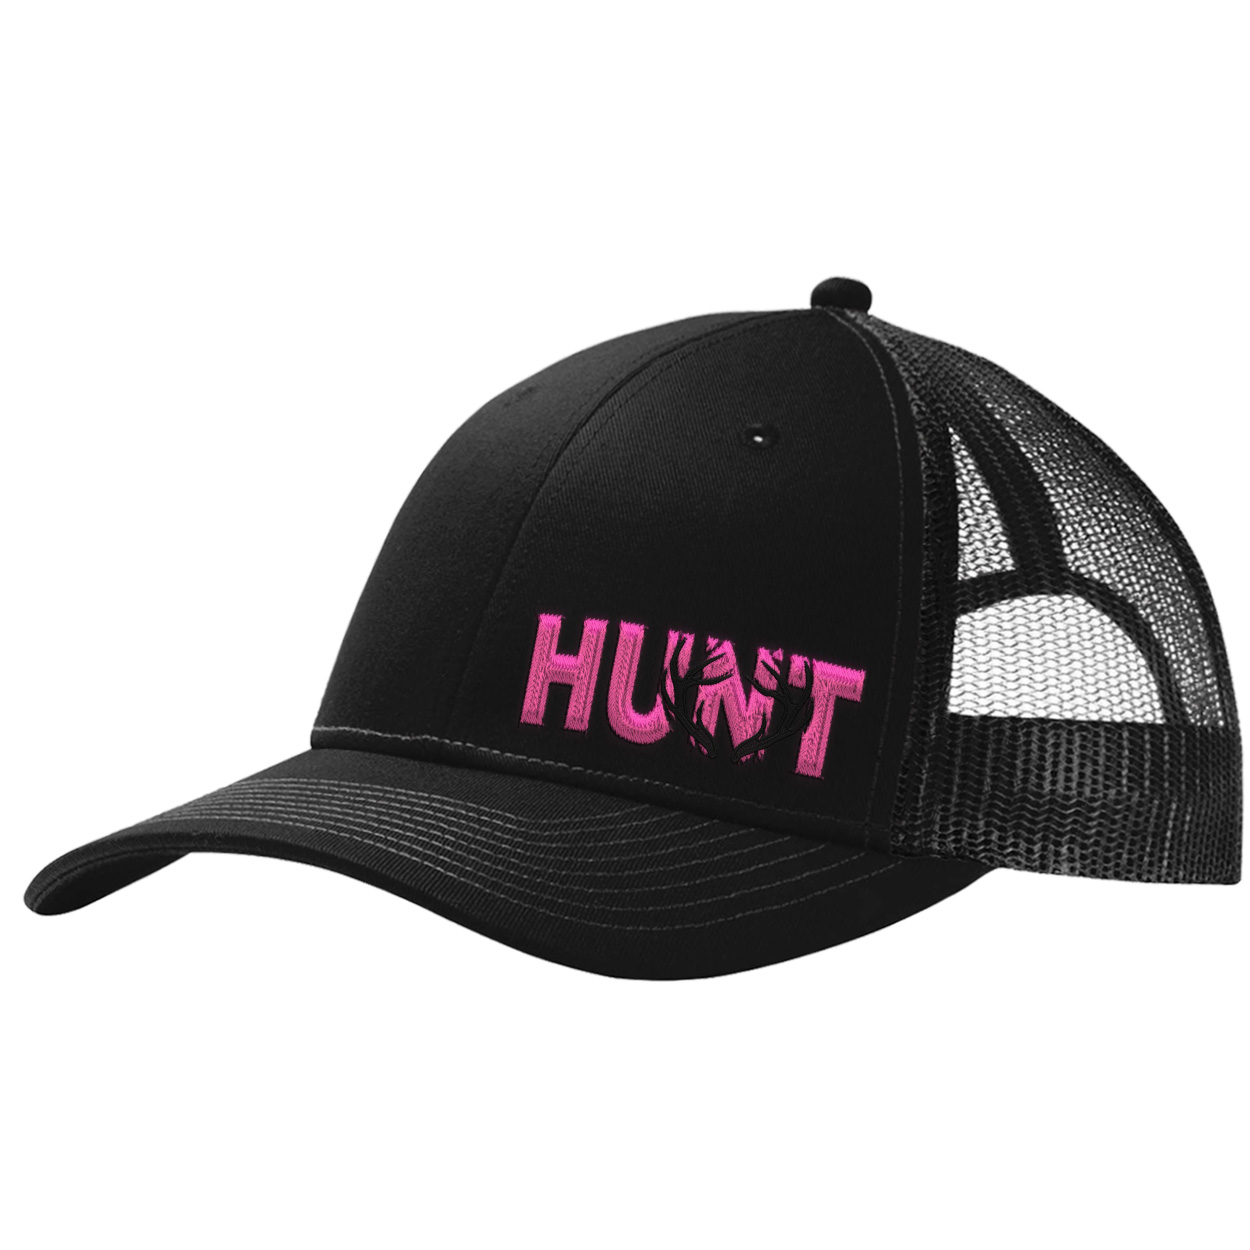 Hunt Rack Logo Night Out Pro Embroidered Snapback Trucker Hat Black (Pink Logo)